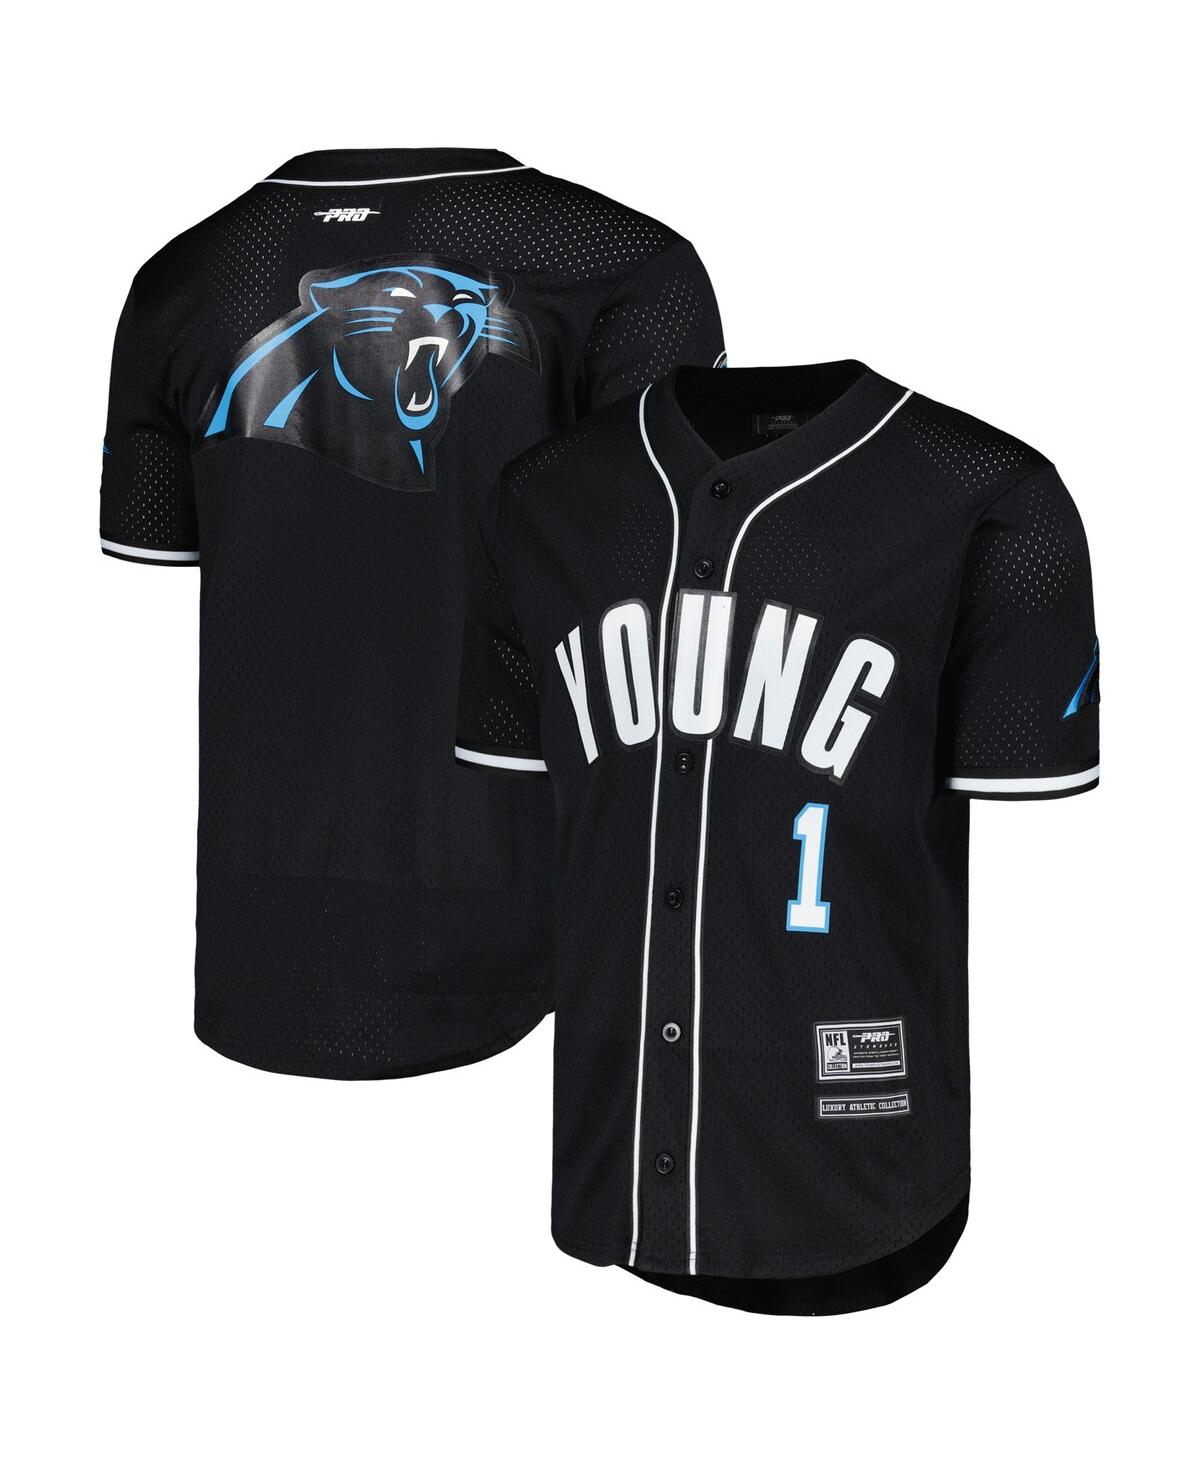 Shop Pro Standard Men's  Bryce Young Black Carolina Panthers Mesh Baseball Button-up T-shirt